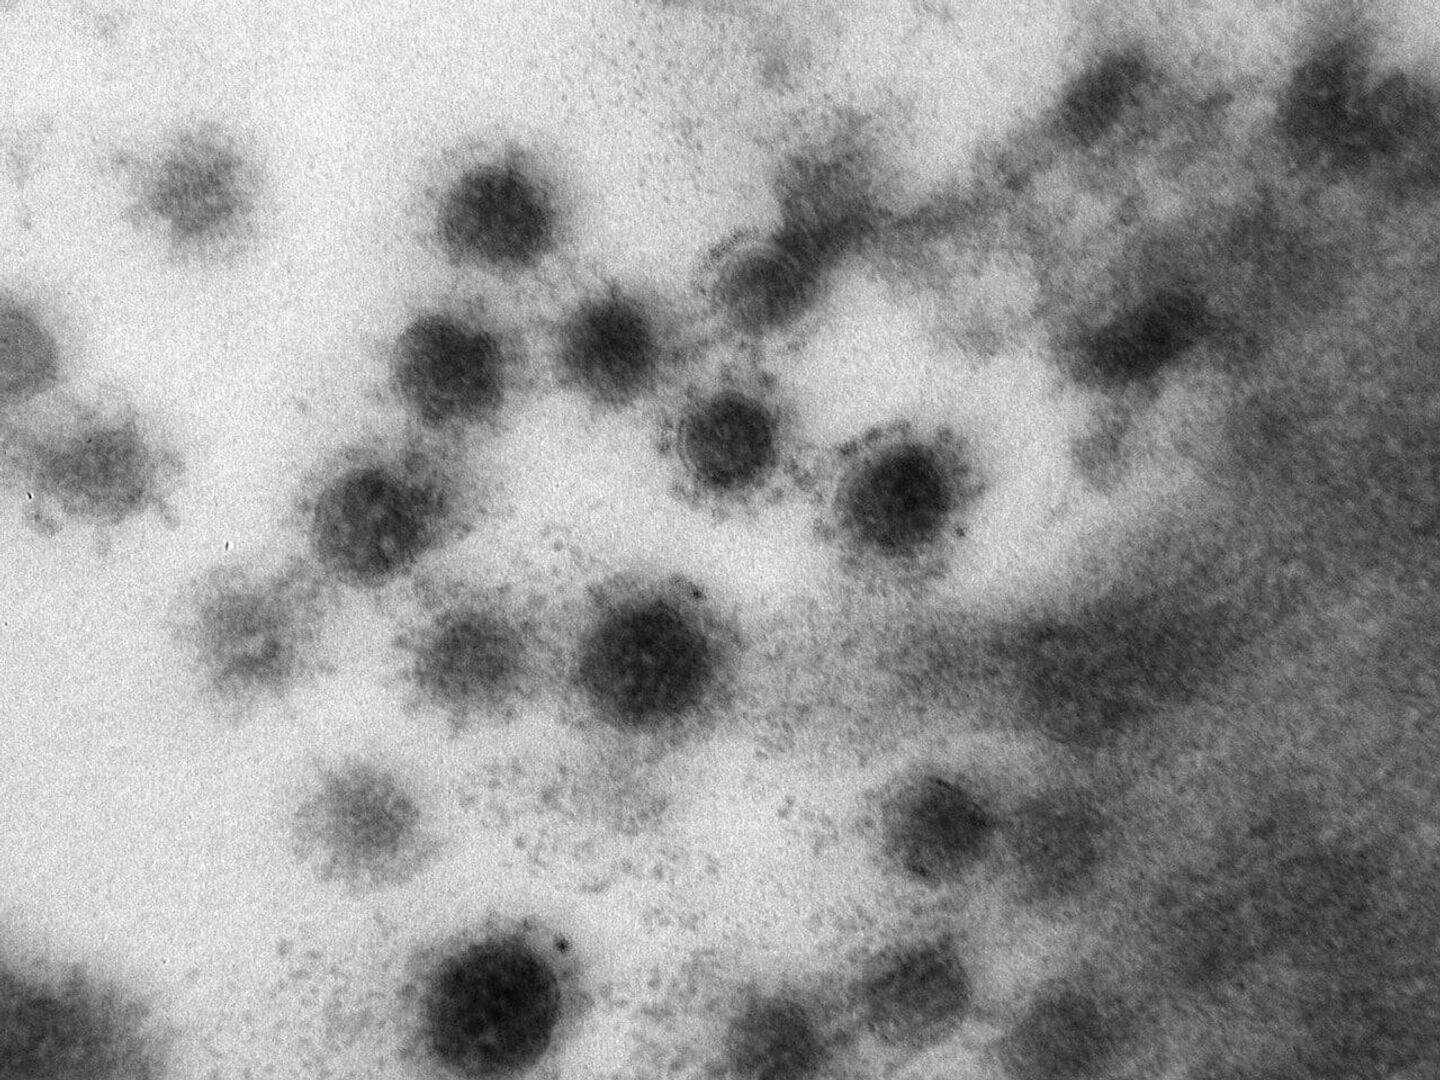 Ковид смертелен. Вирус Covid 19 под микроскопом. Дельта штамм коронавируса под микроскопом. SARS-cov-2 Дельта штамм. Вирус коронавирус микроскоп.